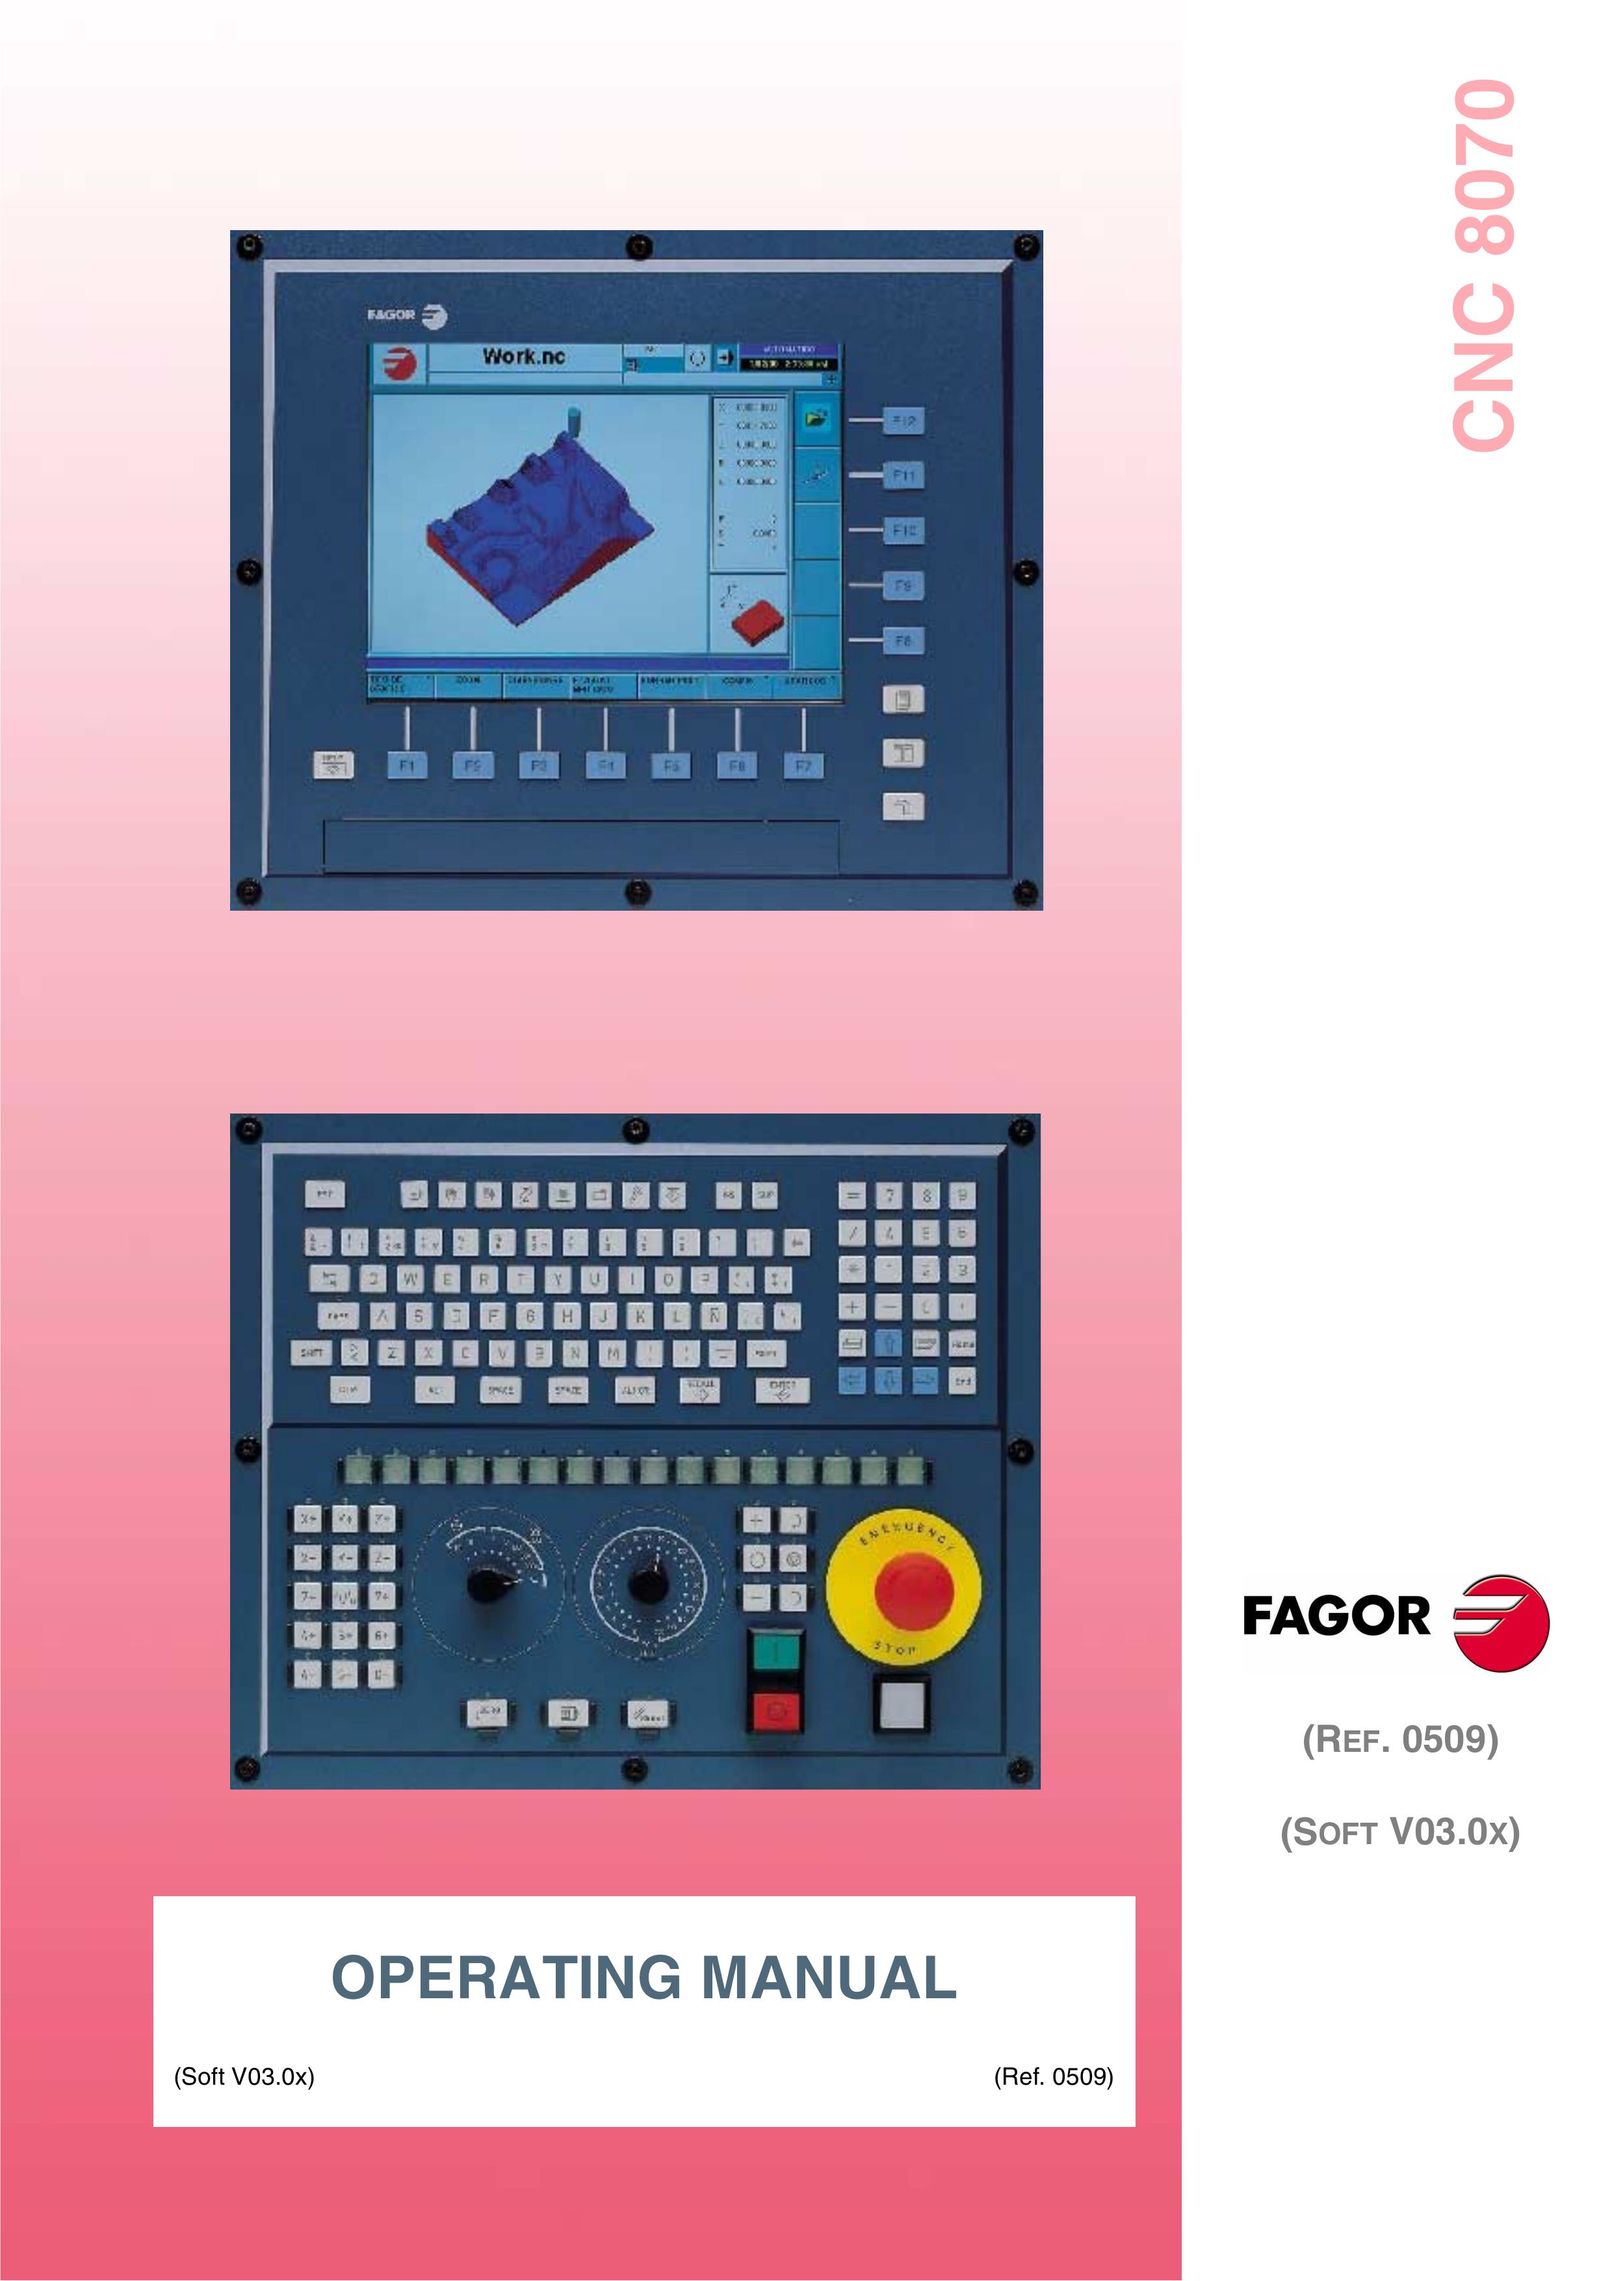 Fagor America CNC8070 Computer Hardware User Manual